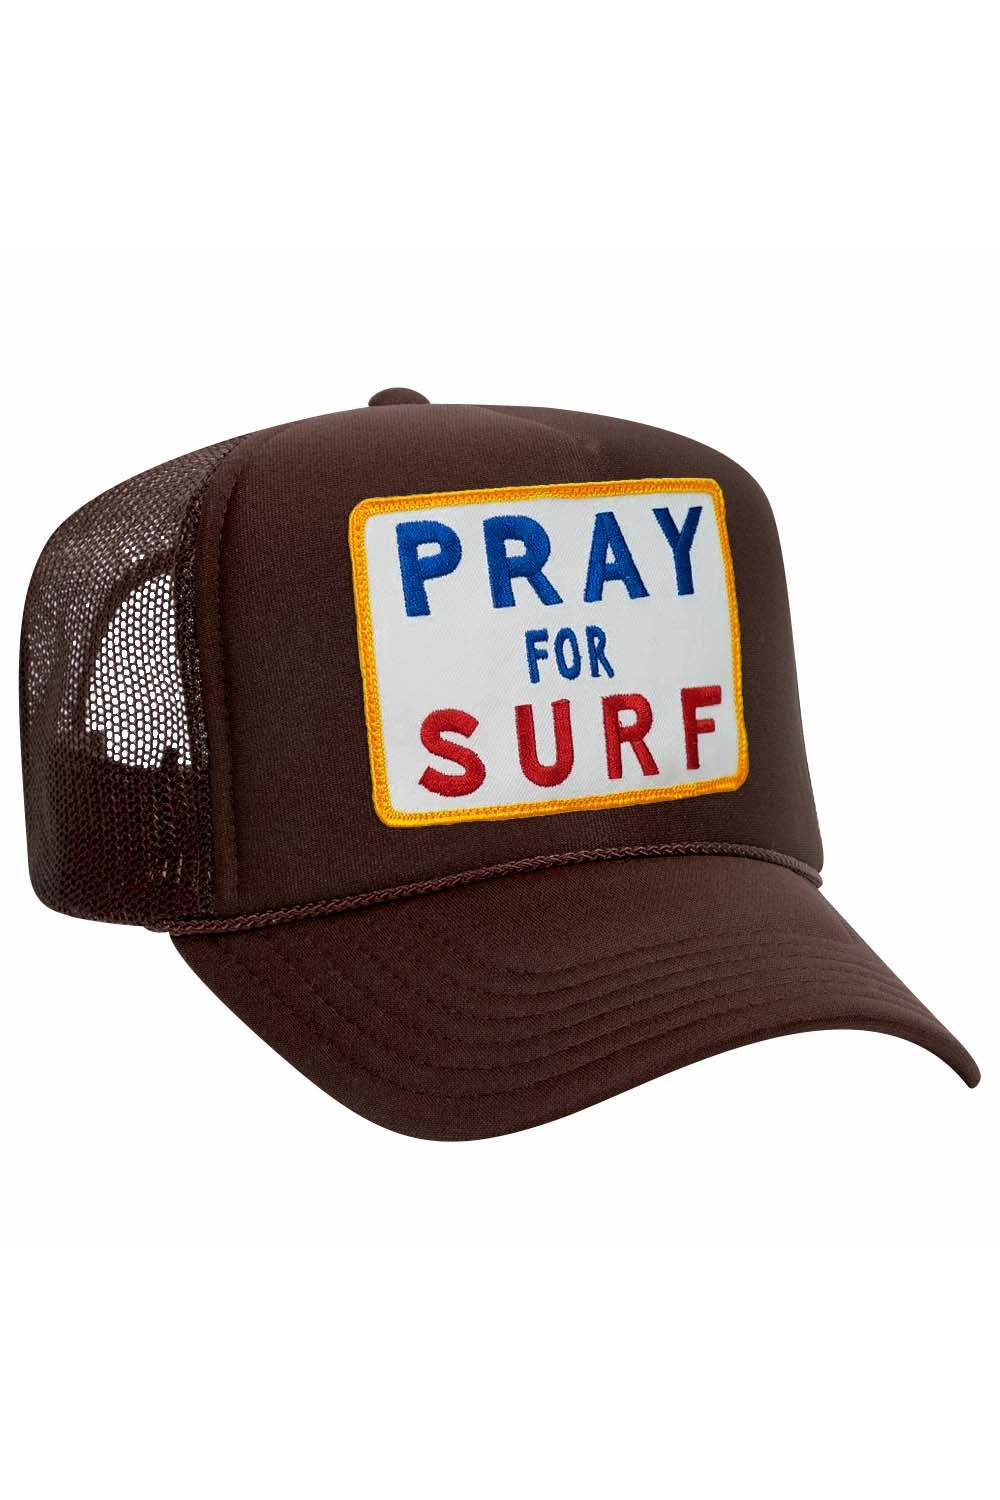 PRAY FOR SURF VINTAGE TRUCKER HAT | Aviator Nation